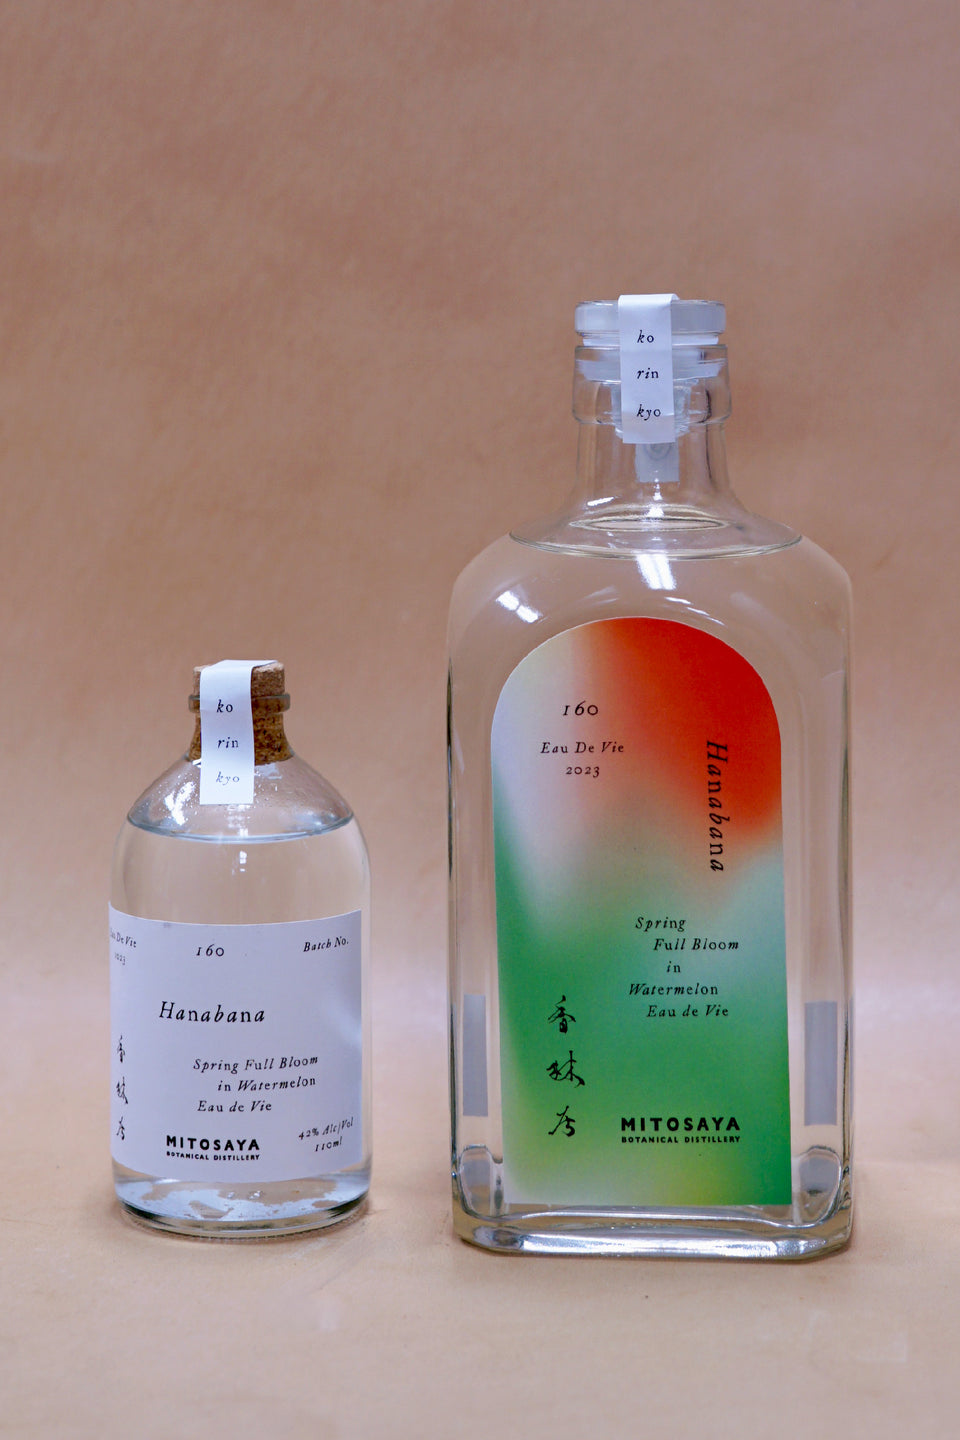 EAU DE VIE – mitosaya botanical distillery